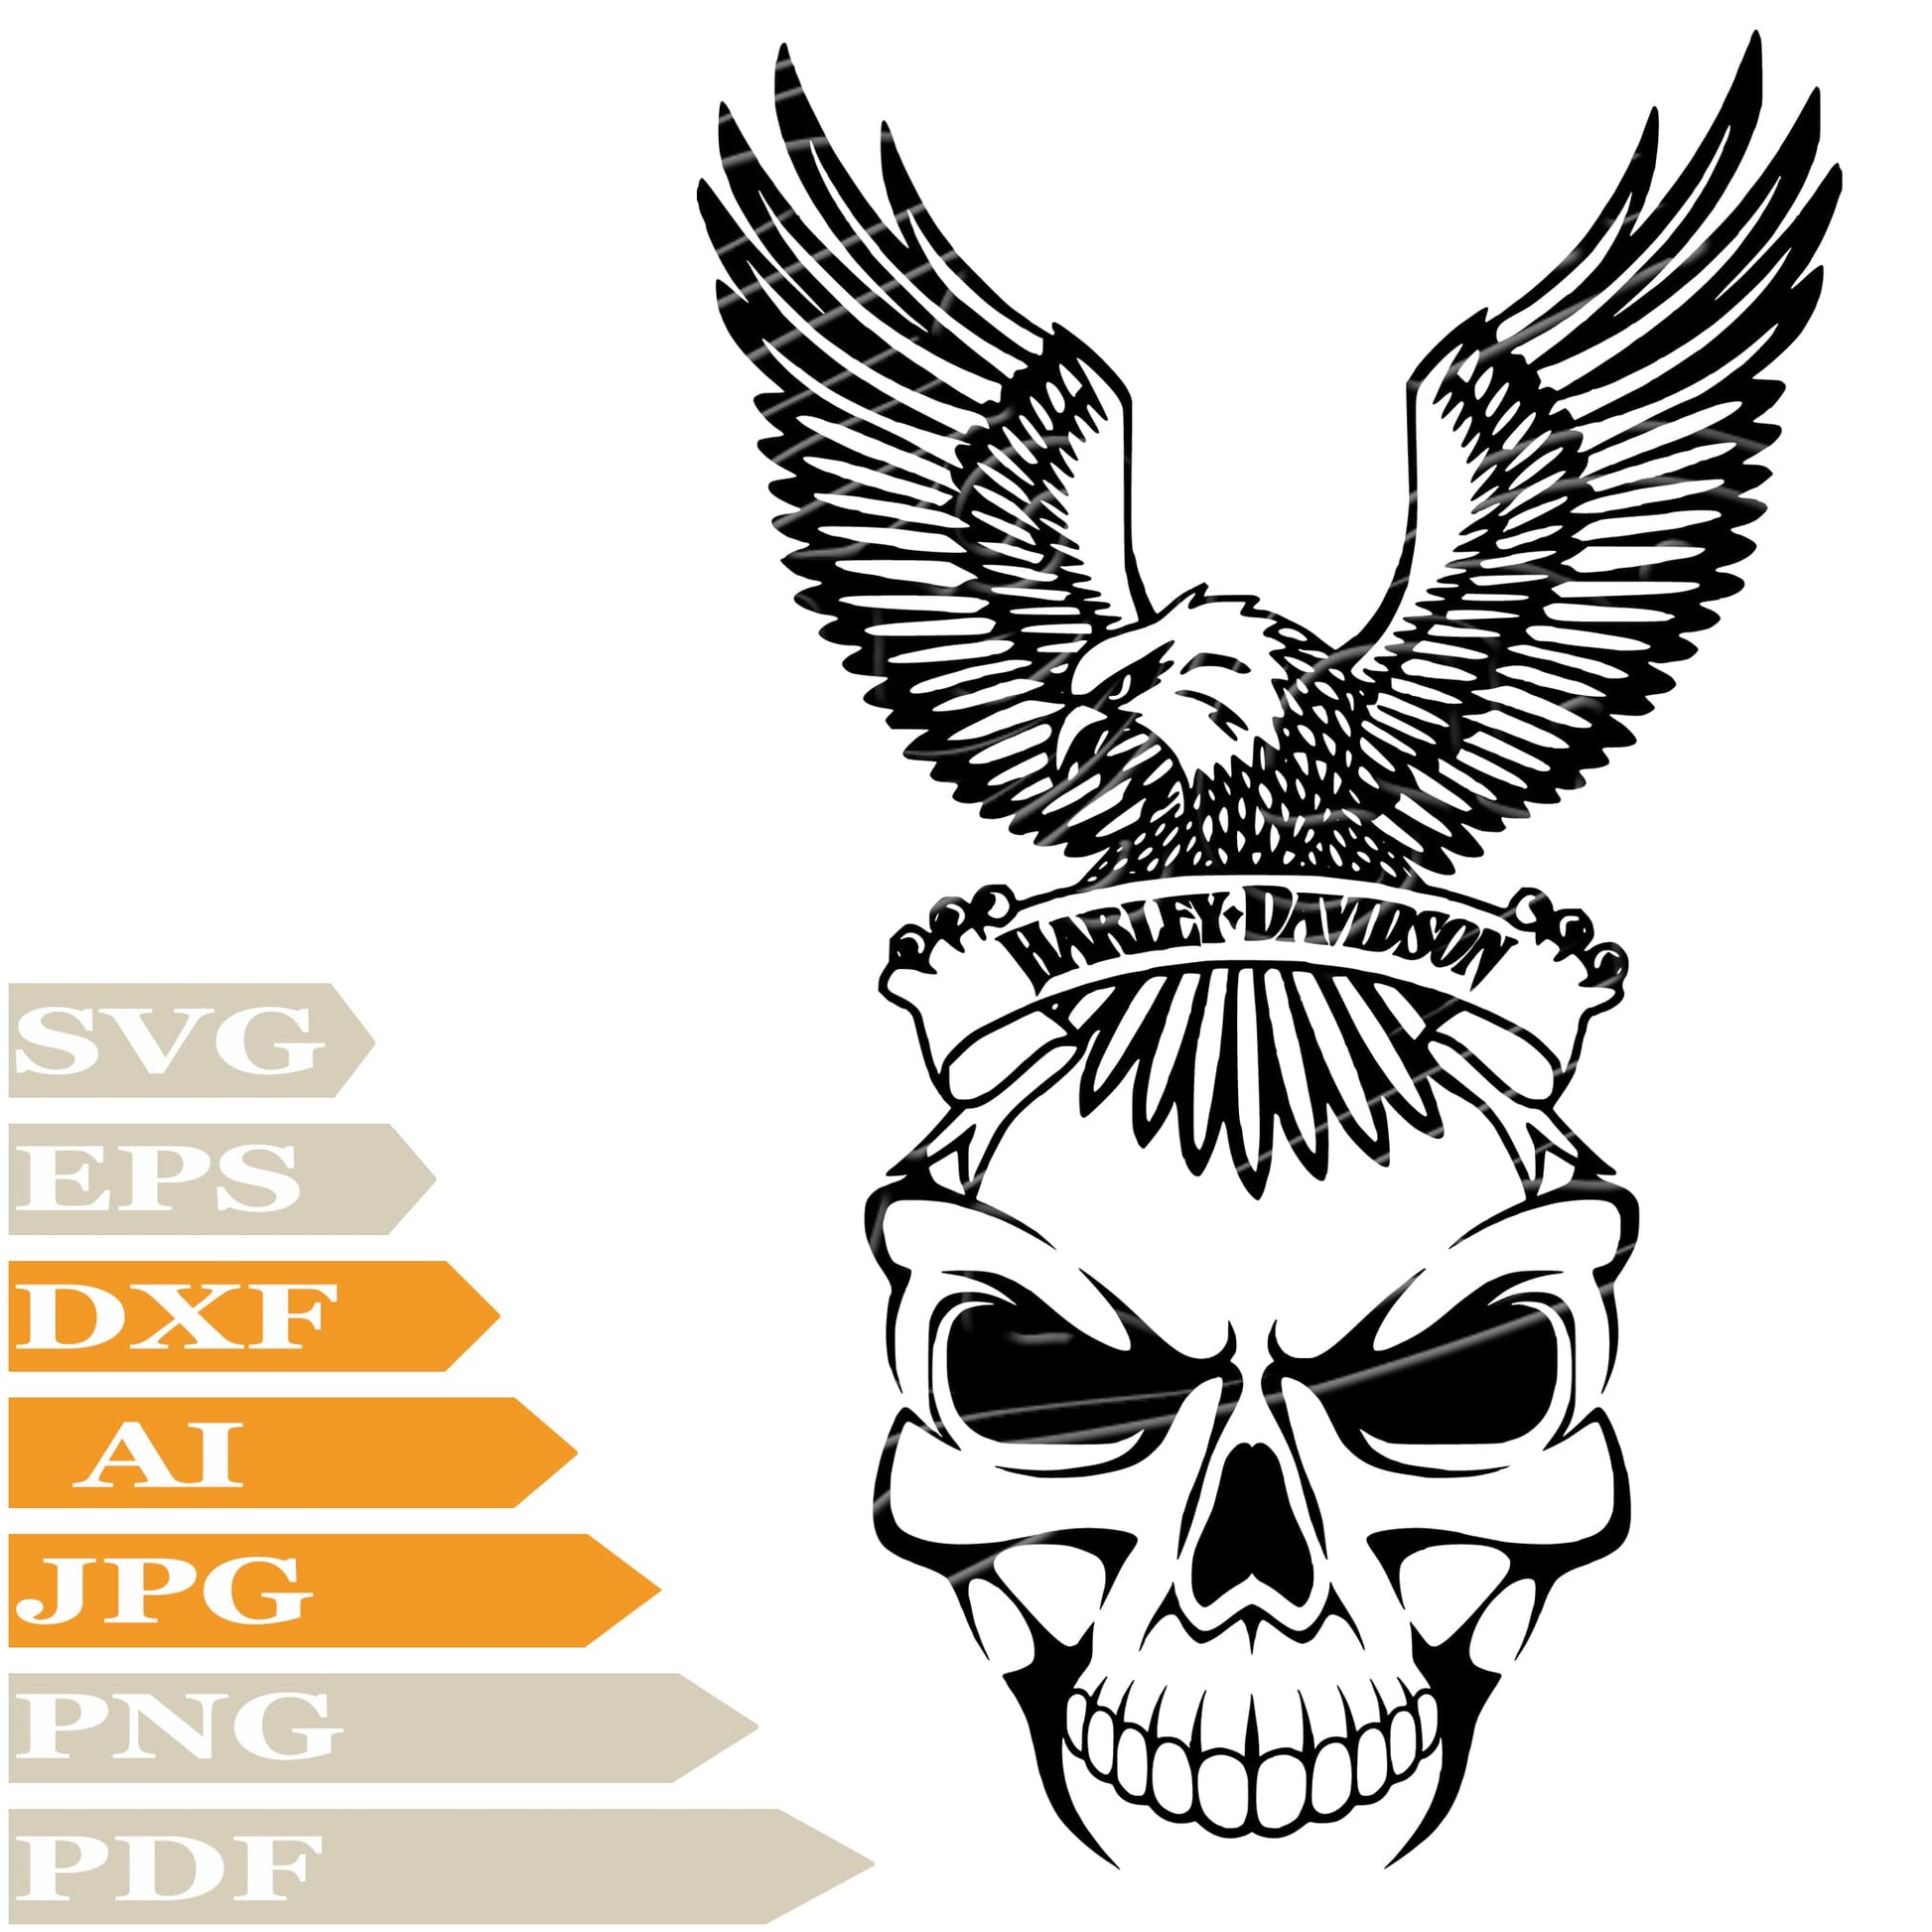 Eagle Harley Davidson, Harley Davidson Logo Svg File, Image Cut, Png, For Tattoo, Silhouette, Digital Vector Download, Cut File, Clipart, For Cricut